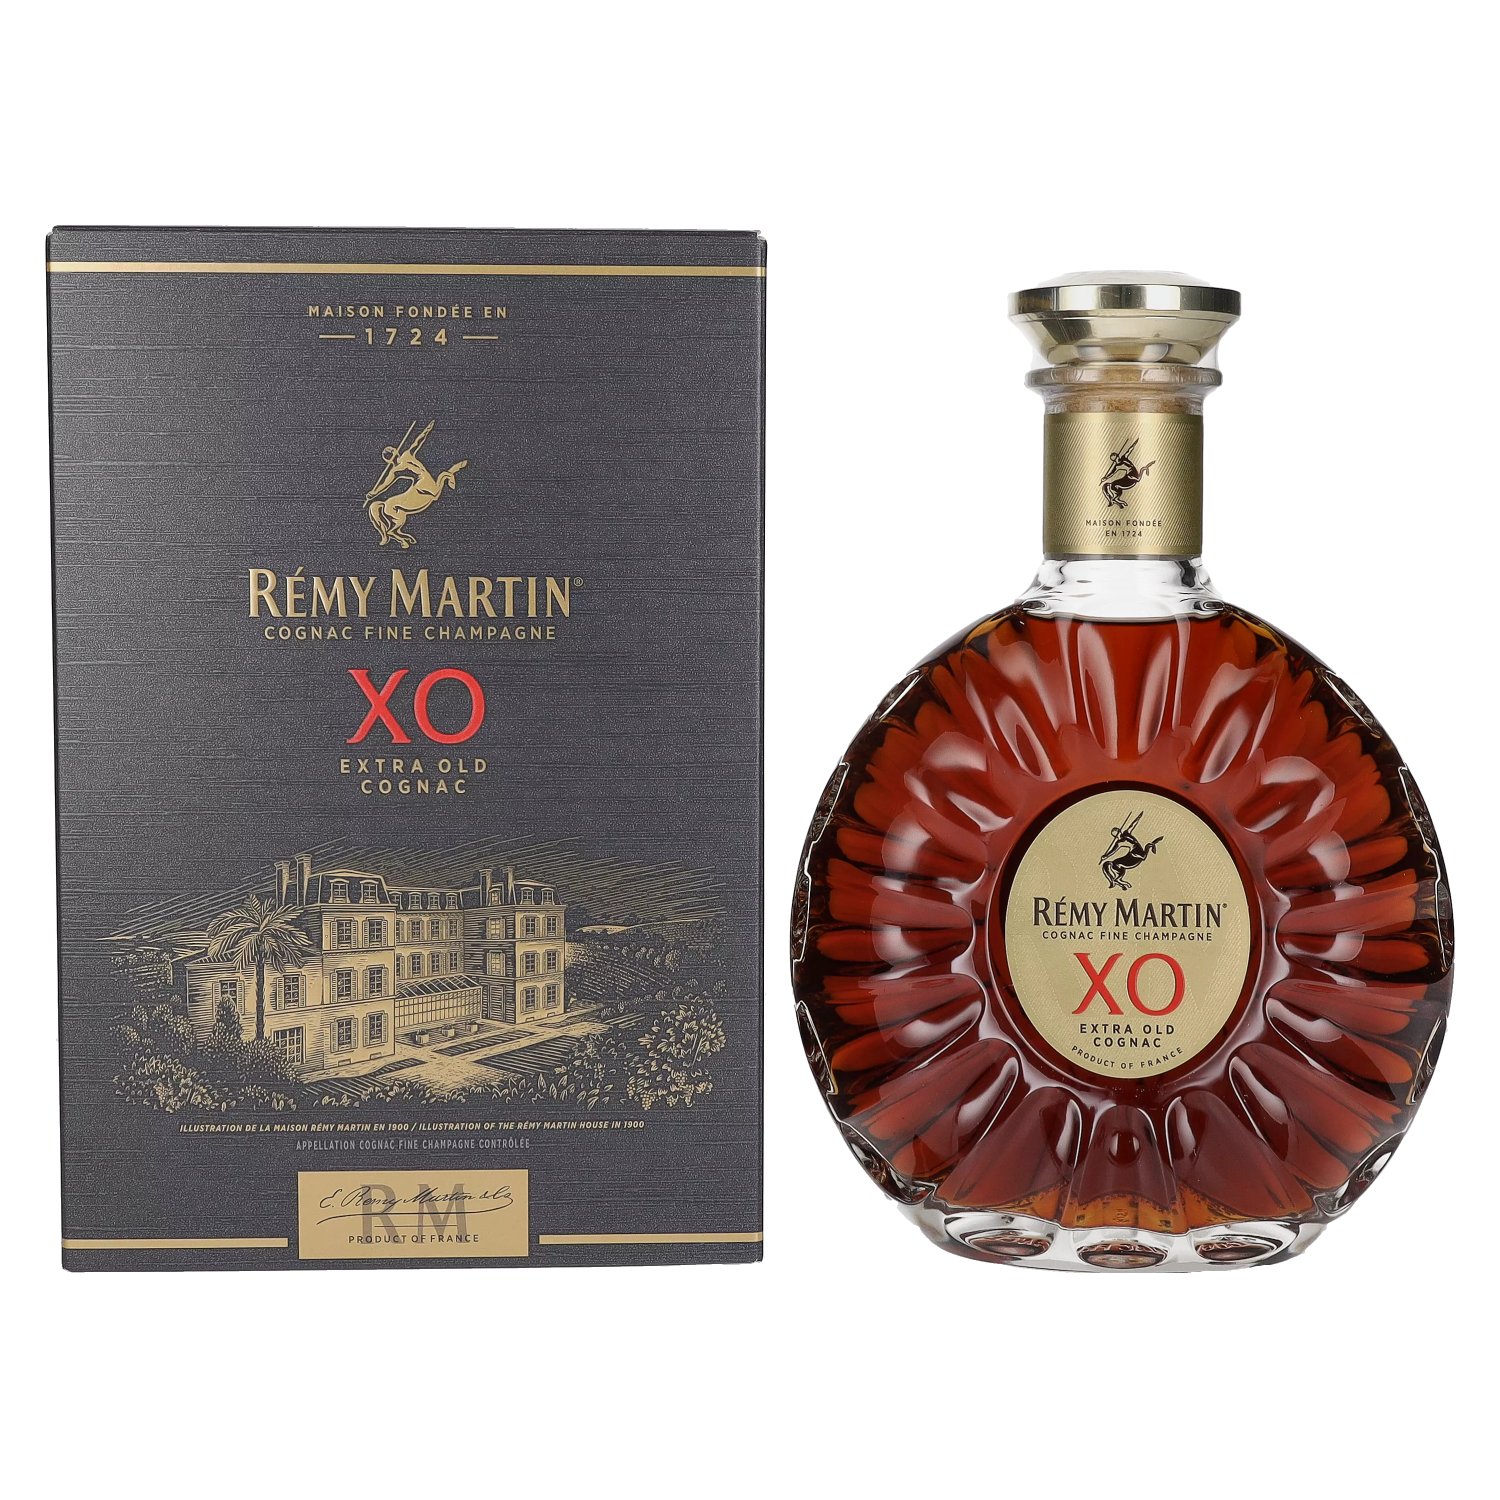 Martin Vol. Cognac in OLD Fine EXTRA 40% Giftbox Champagne 0,7l XO Rémy